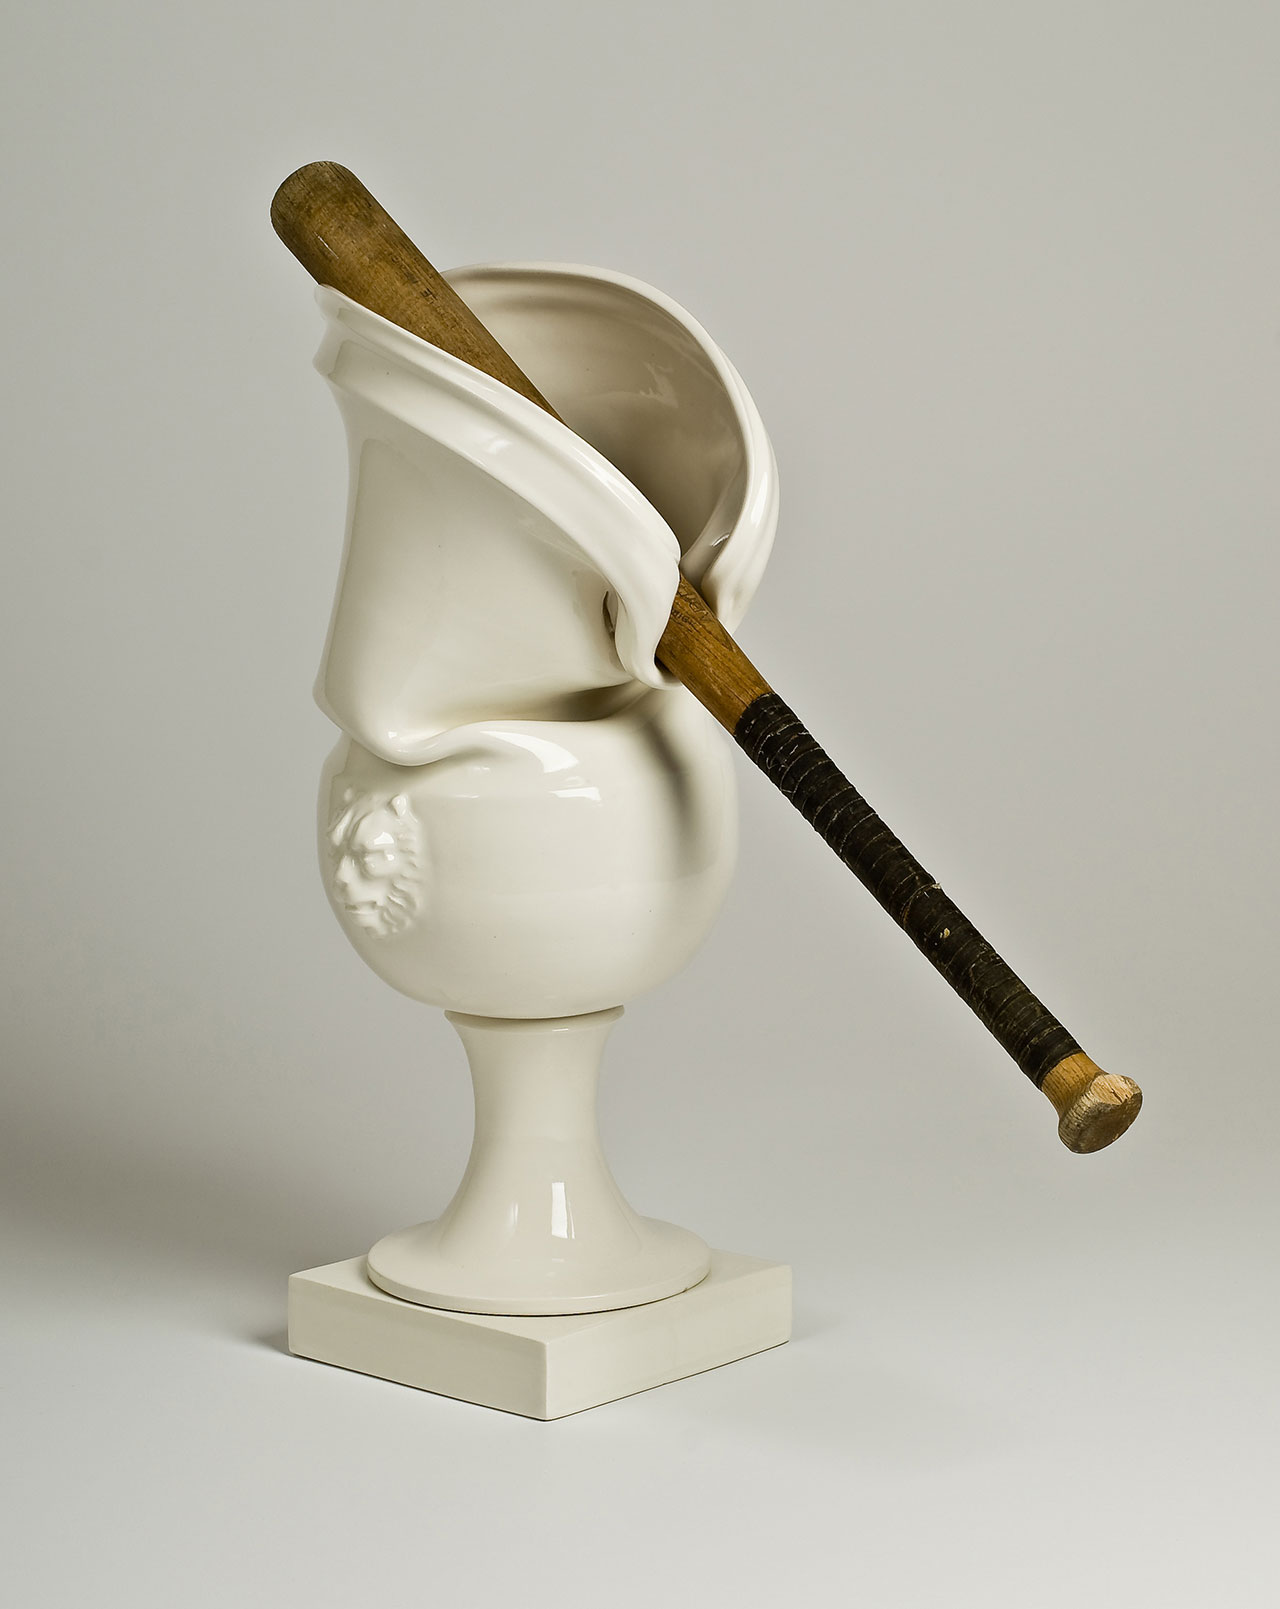 Craste Laurent，Iconocraste au bat I，2010 年。瓷器、釉料、棒球棒。 63.5 x 27.1 x 63.5 厘米。 克拉里奇收藏。